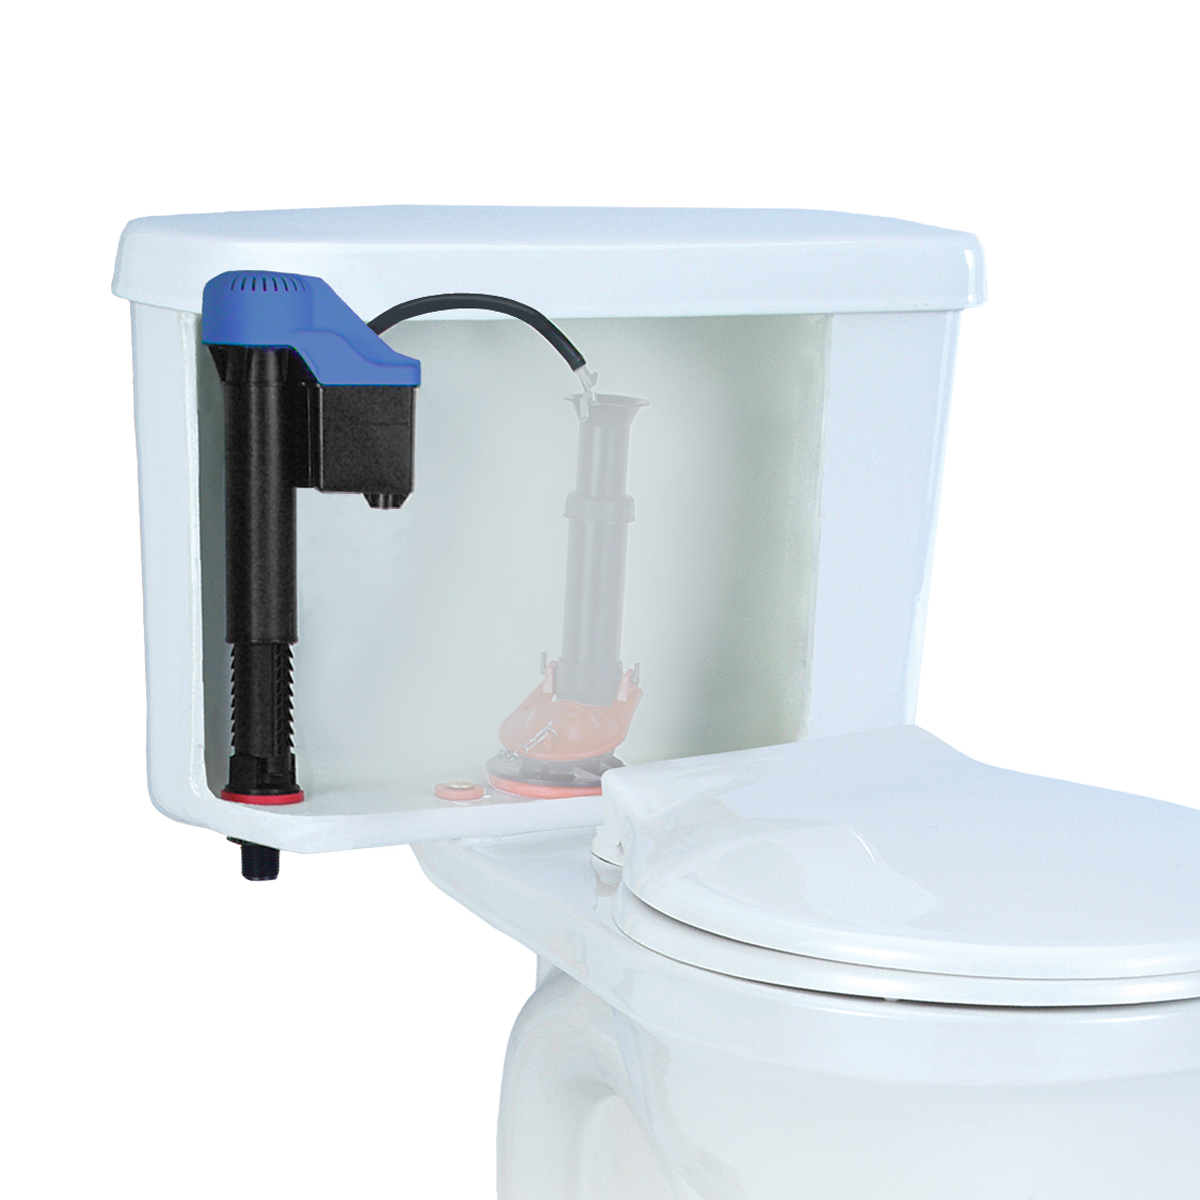 TOTO Toilet Fill Valve in Toilet Tank